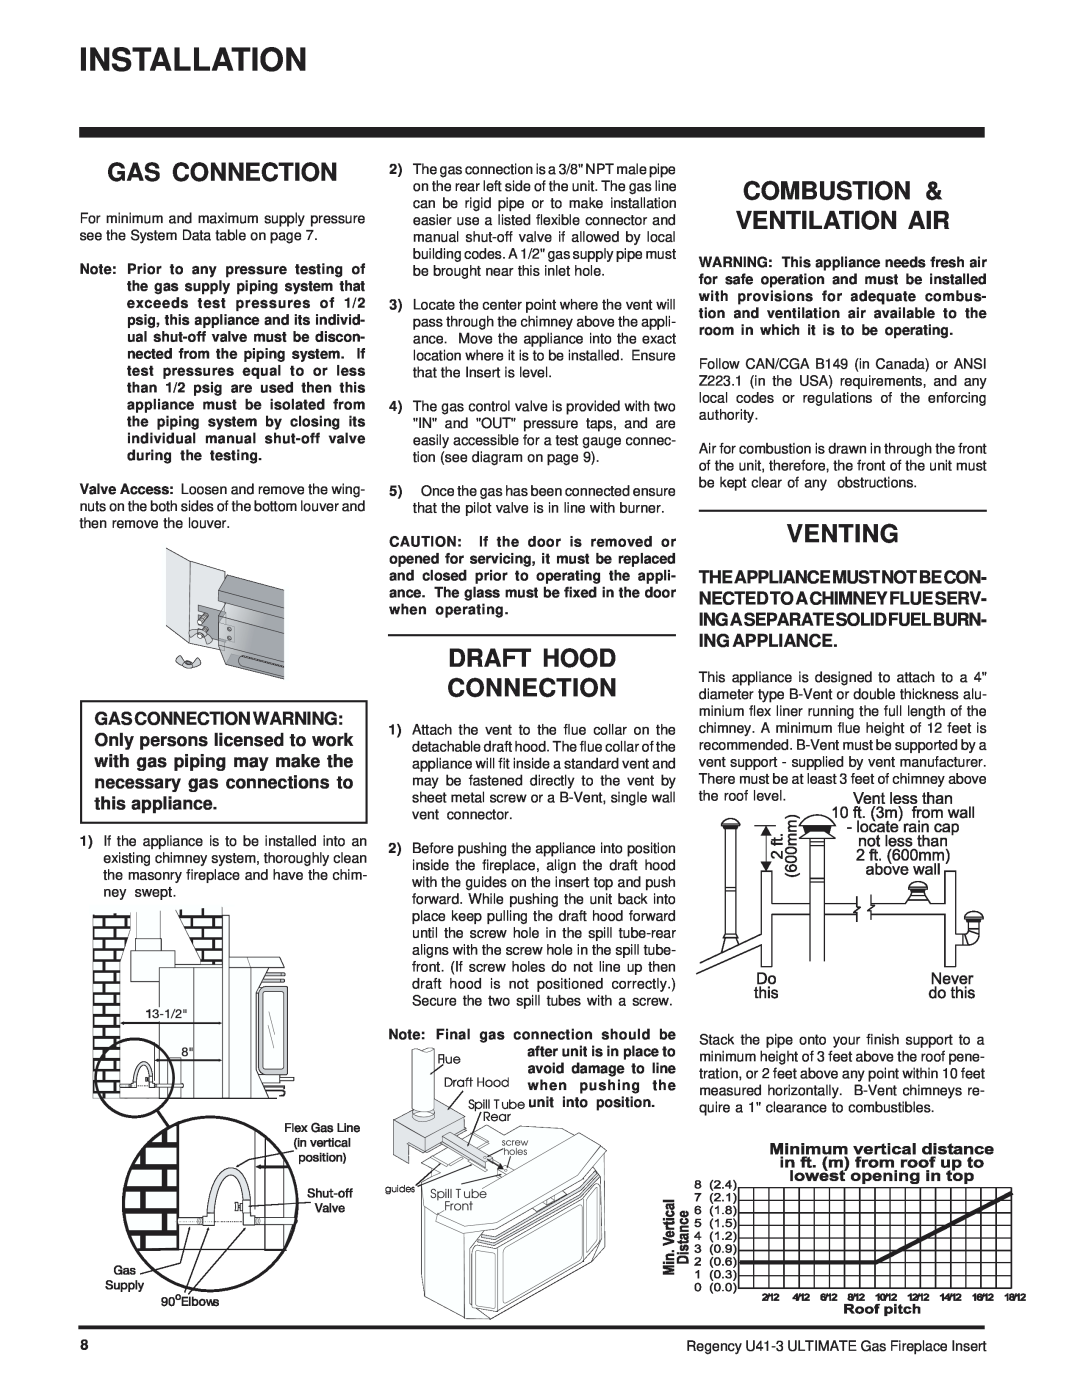 Regency U41-NG3, U41-LP3 installation manual Gas Connection, Draft Hood Connection, Combustion & Ventilation Air, Venting 